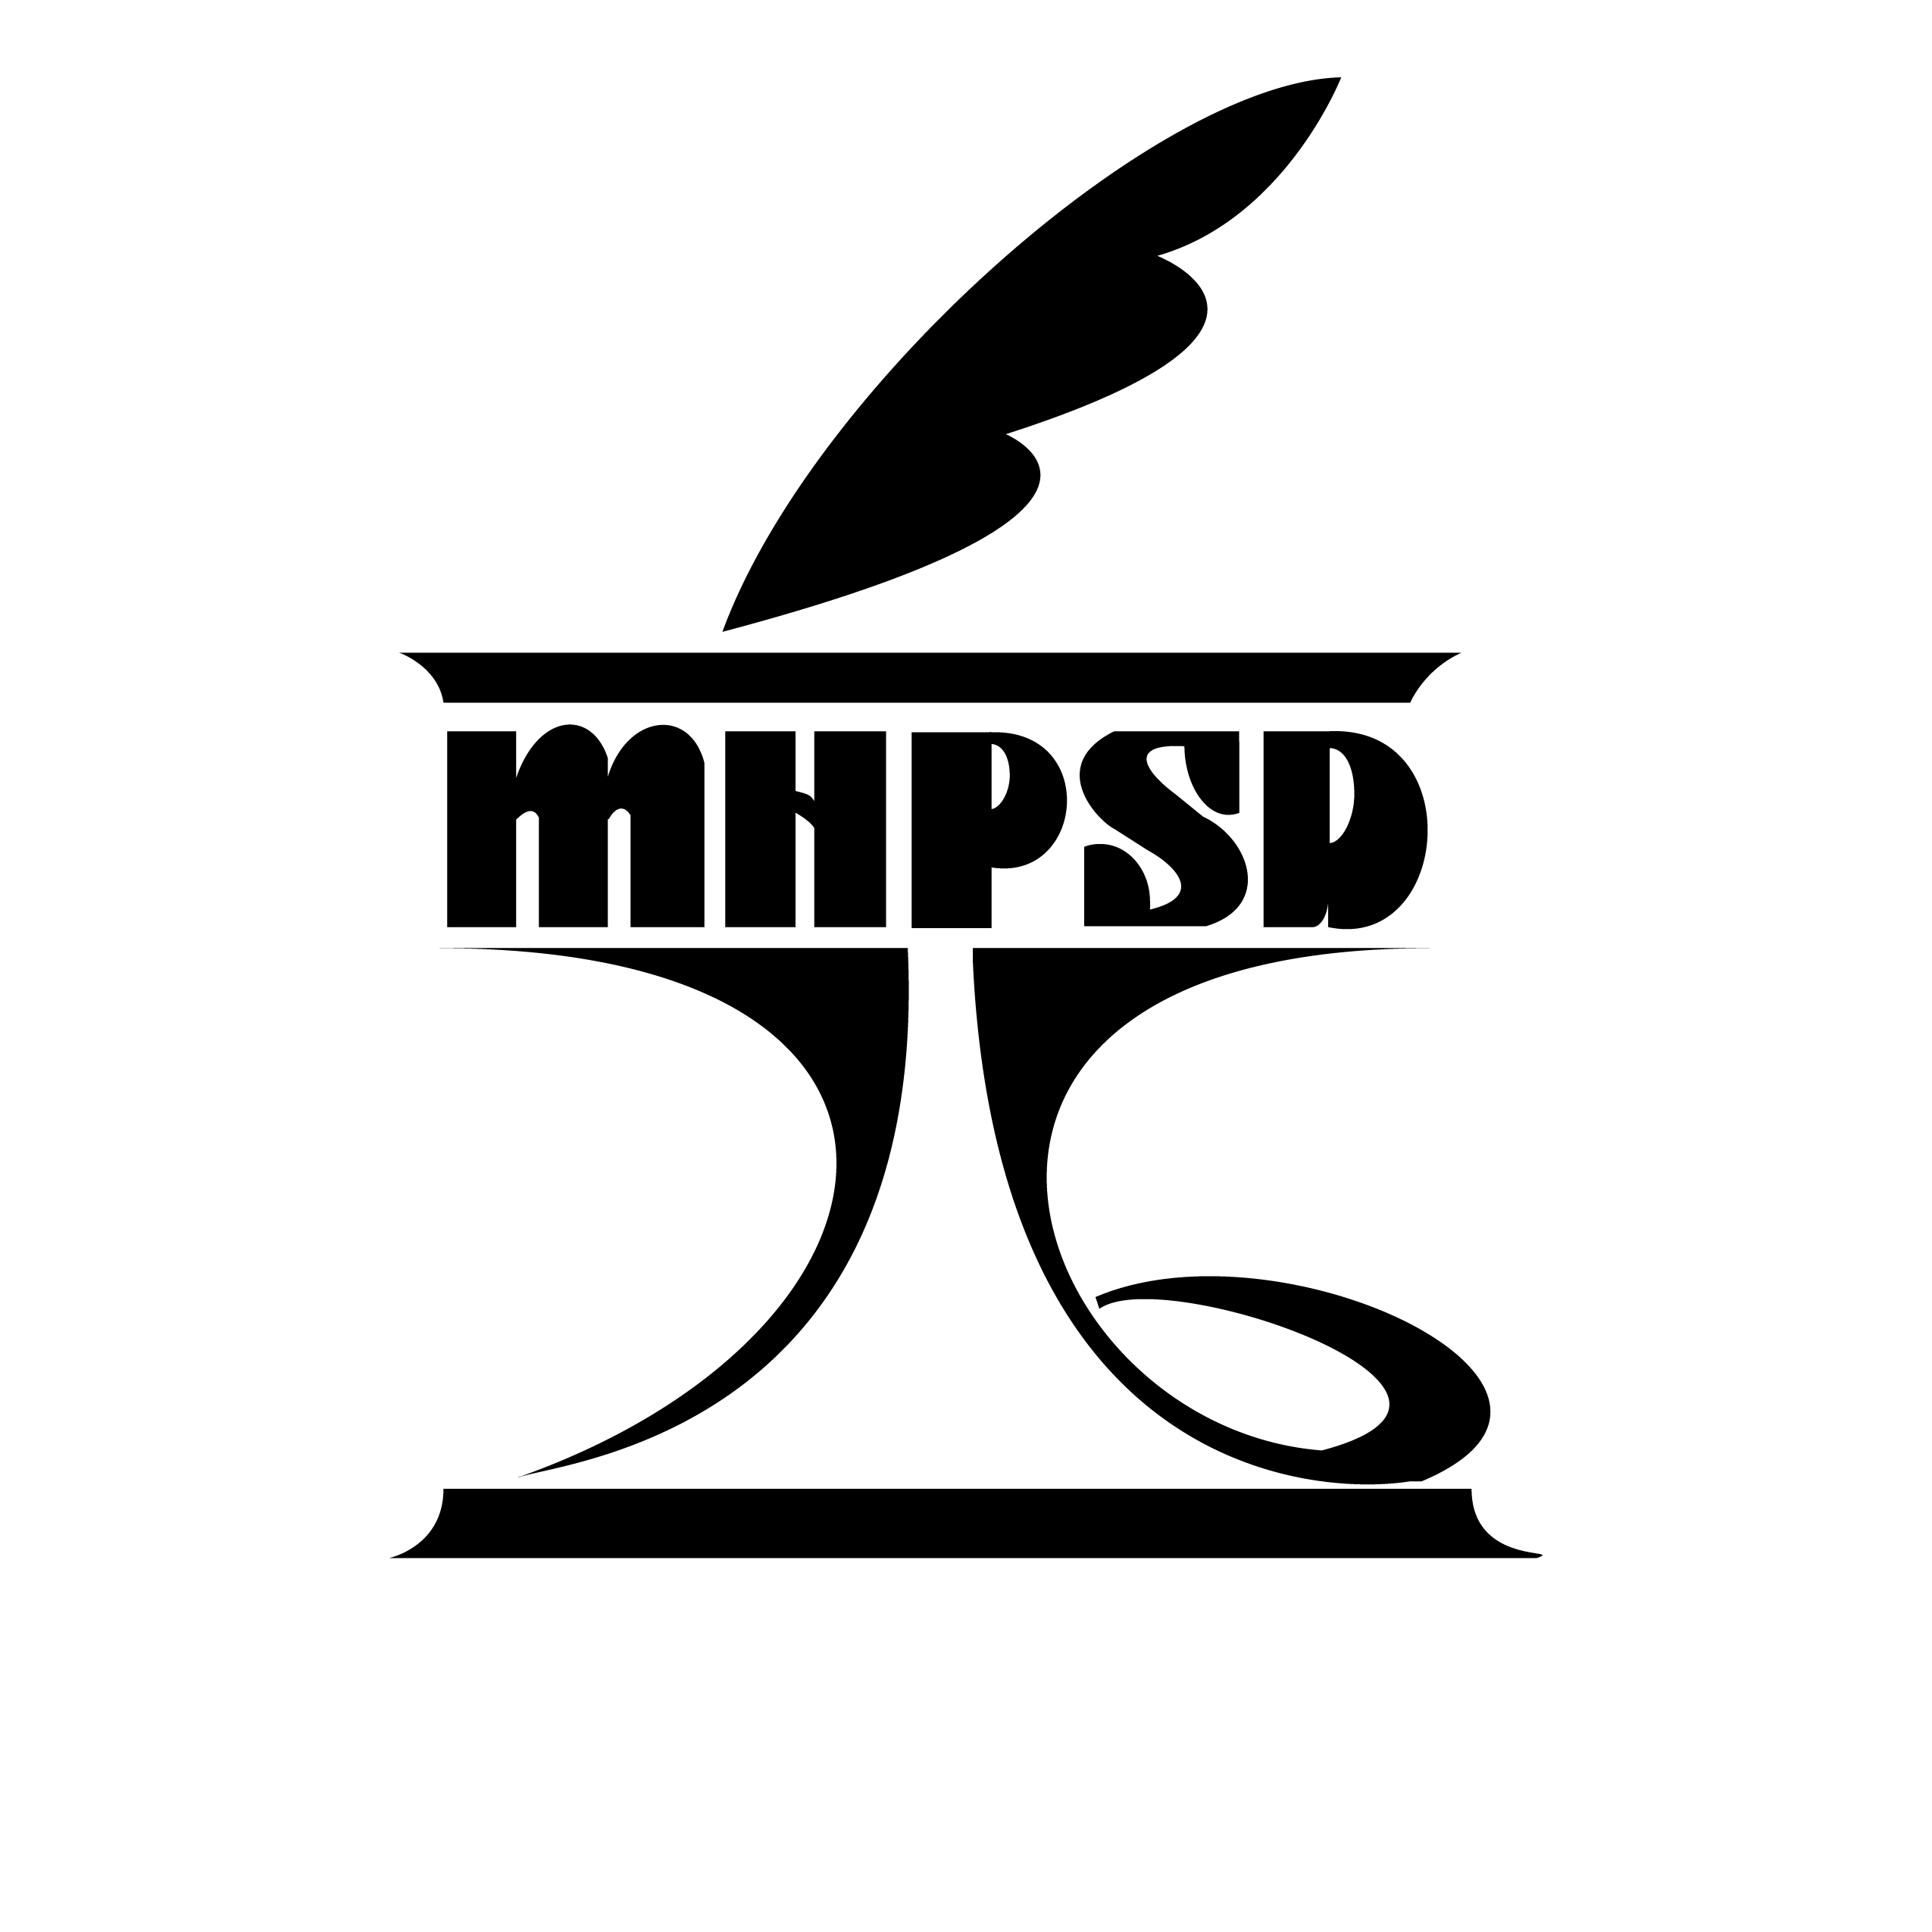 MHPSD logo black transparent-01